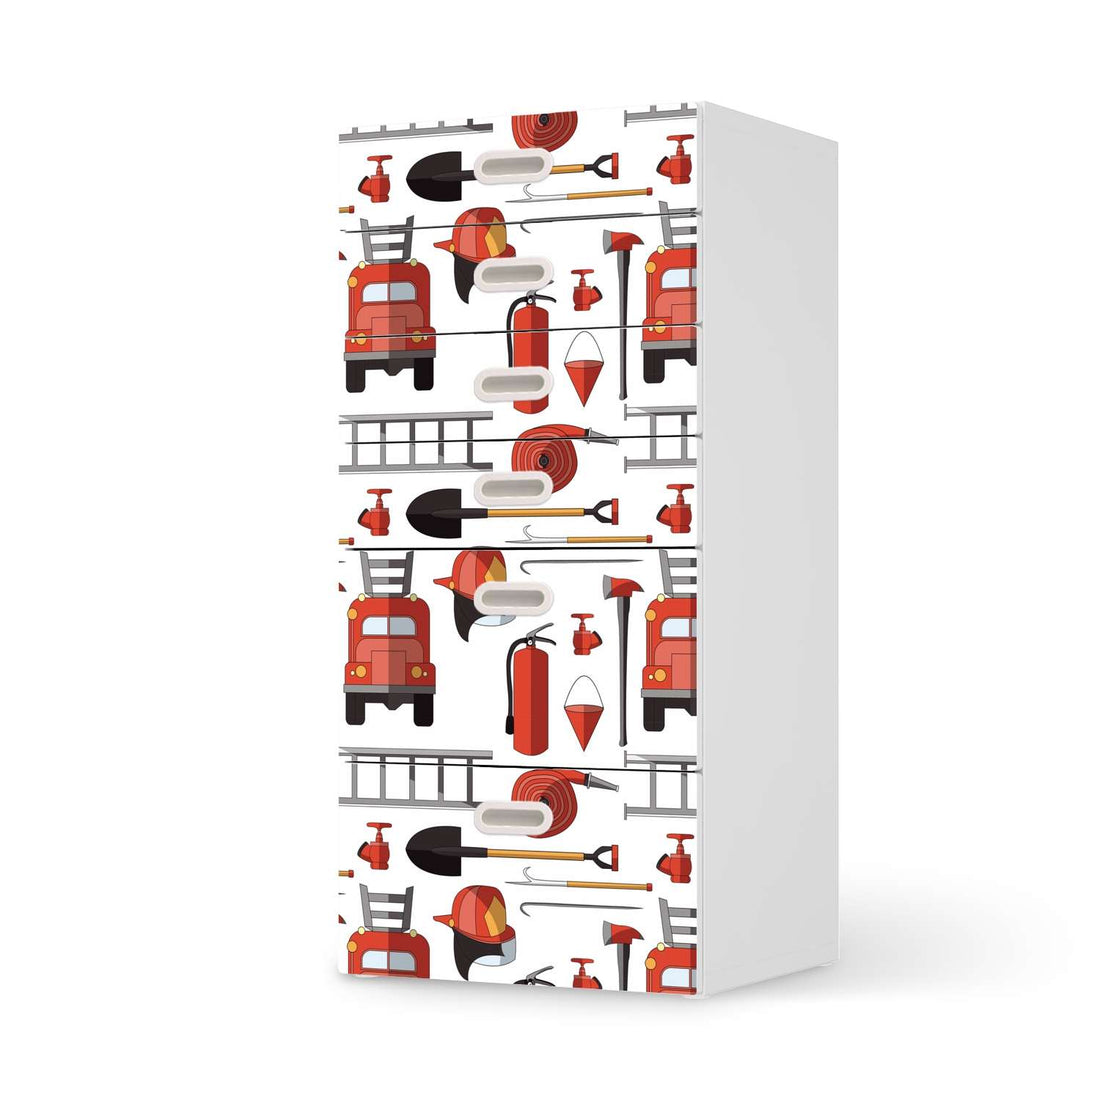 Klebefolie für Möbel Firefighter - IKEA Stuva / Fritids Kommode - 6 Schubladen  - weiss